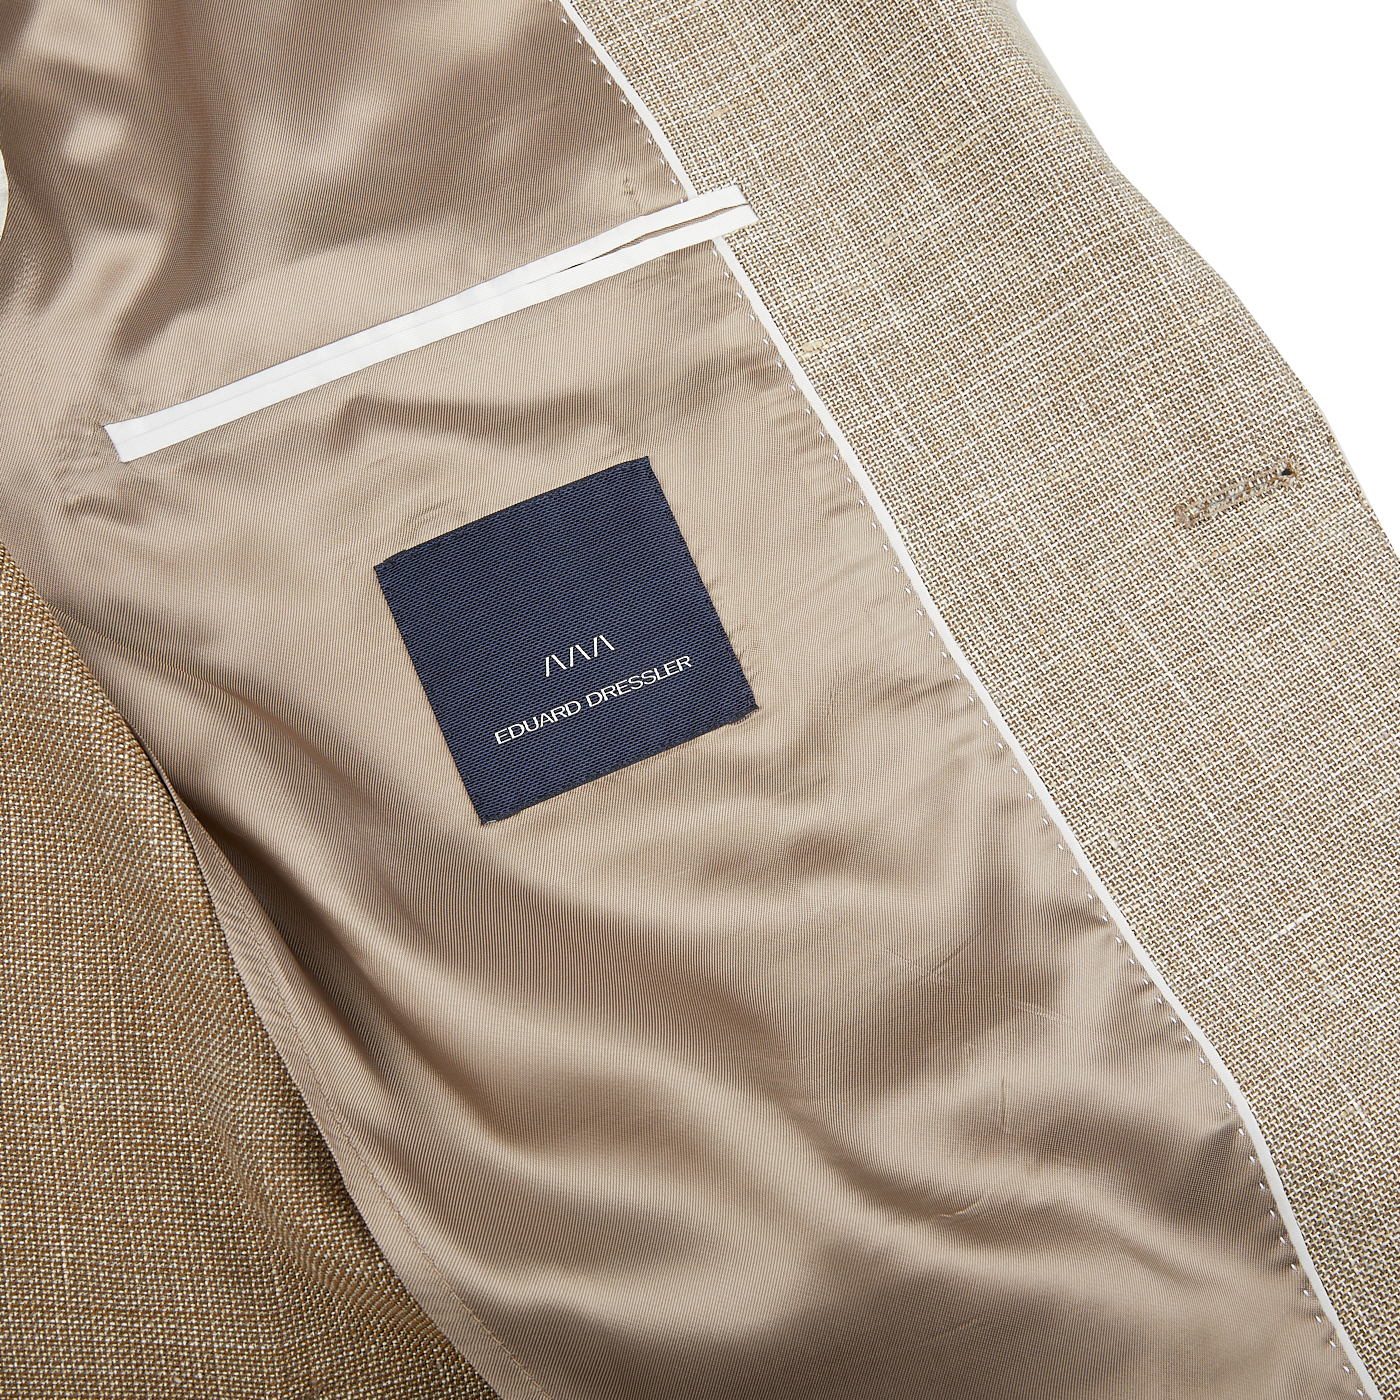 A Light Brown Wool Linen Hopsack Sendrik Blazer constructed with a wool-linen fabric, featuring an Eduard Dressler label on the back.